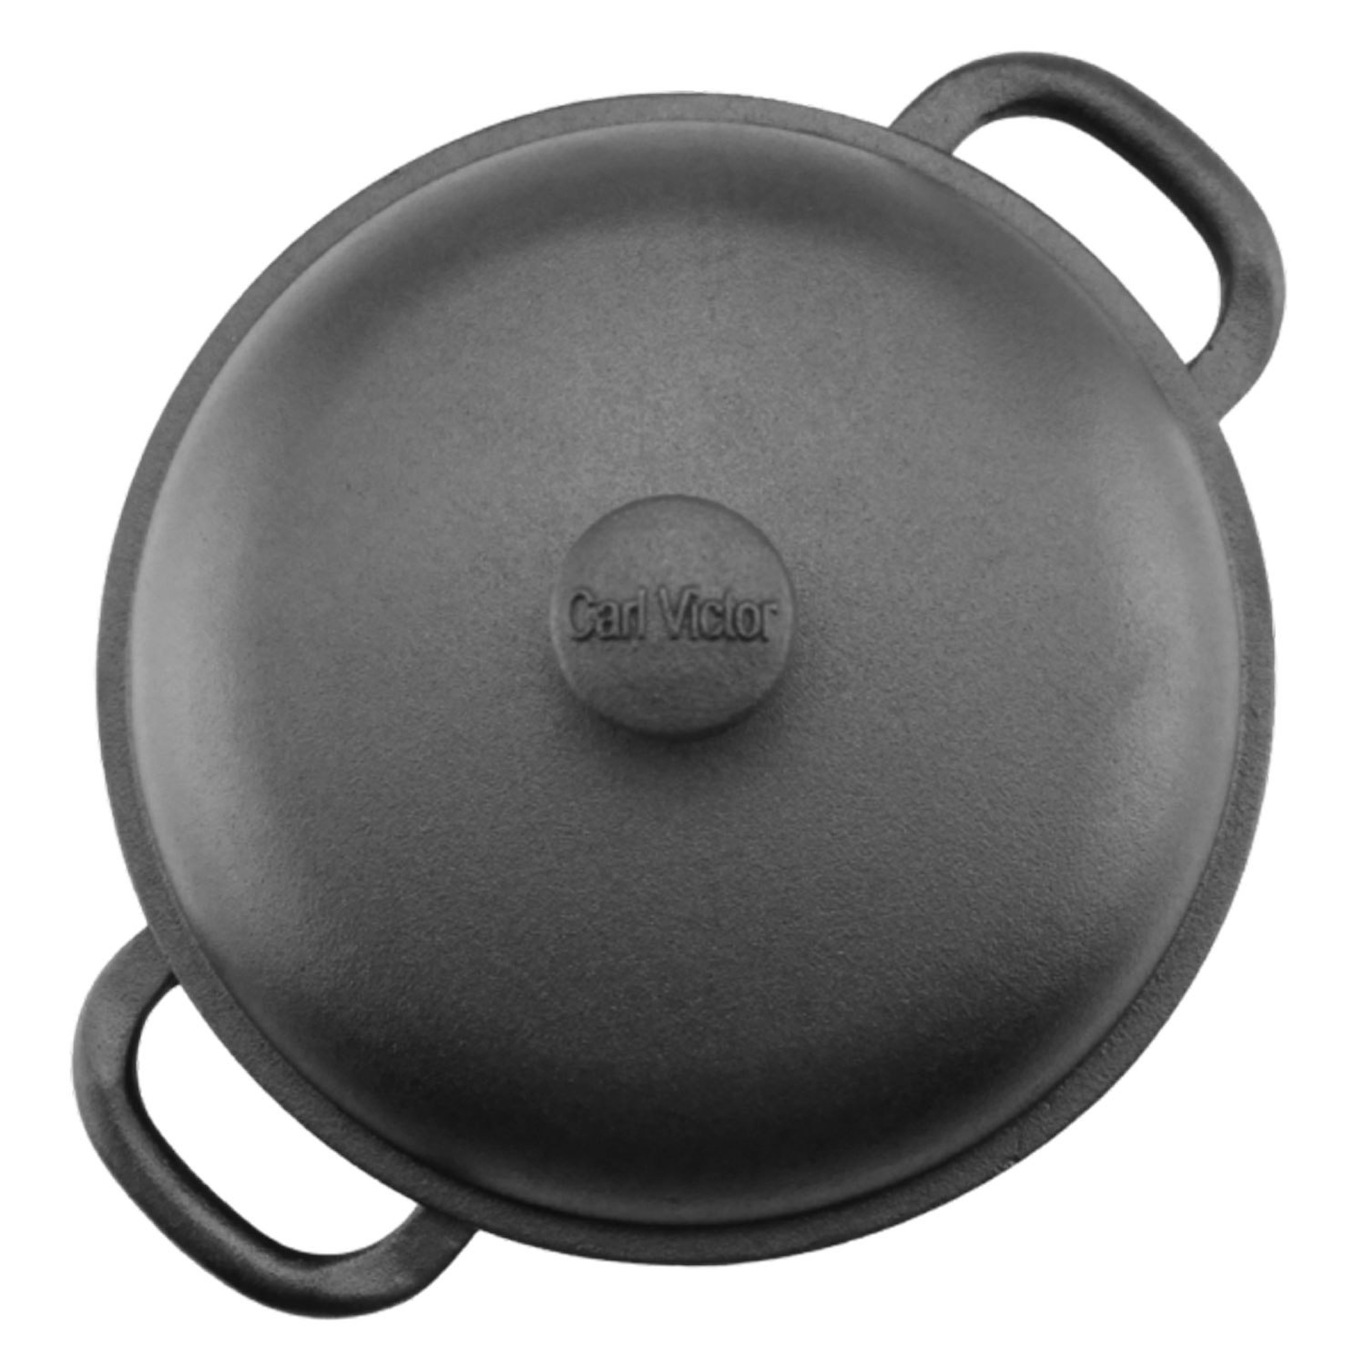 https://royaldesign.com/image/2/carl-victor-cast-iron-pot-with-lid-4-l-4?w=800&quality=80